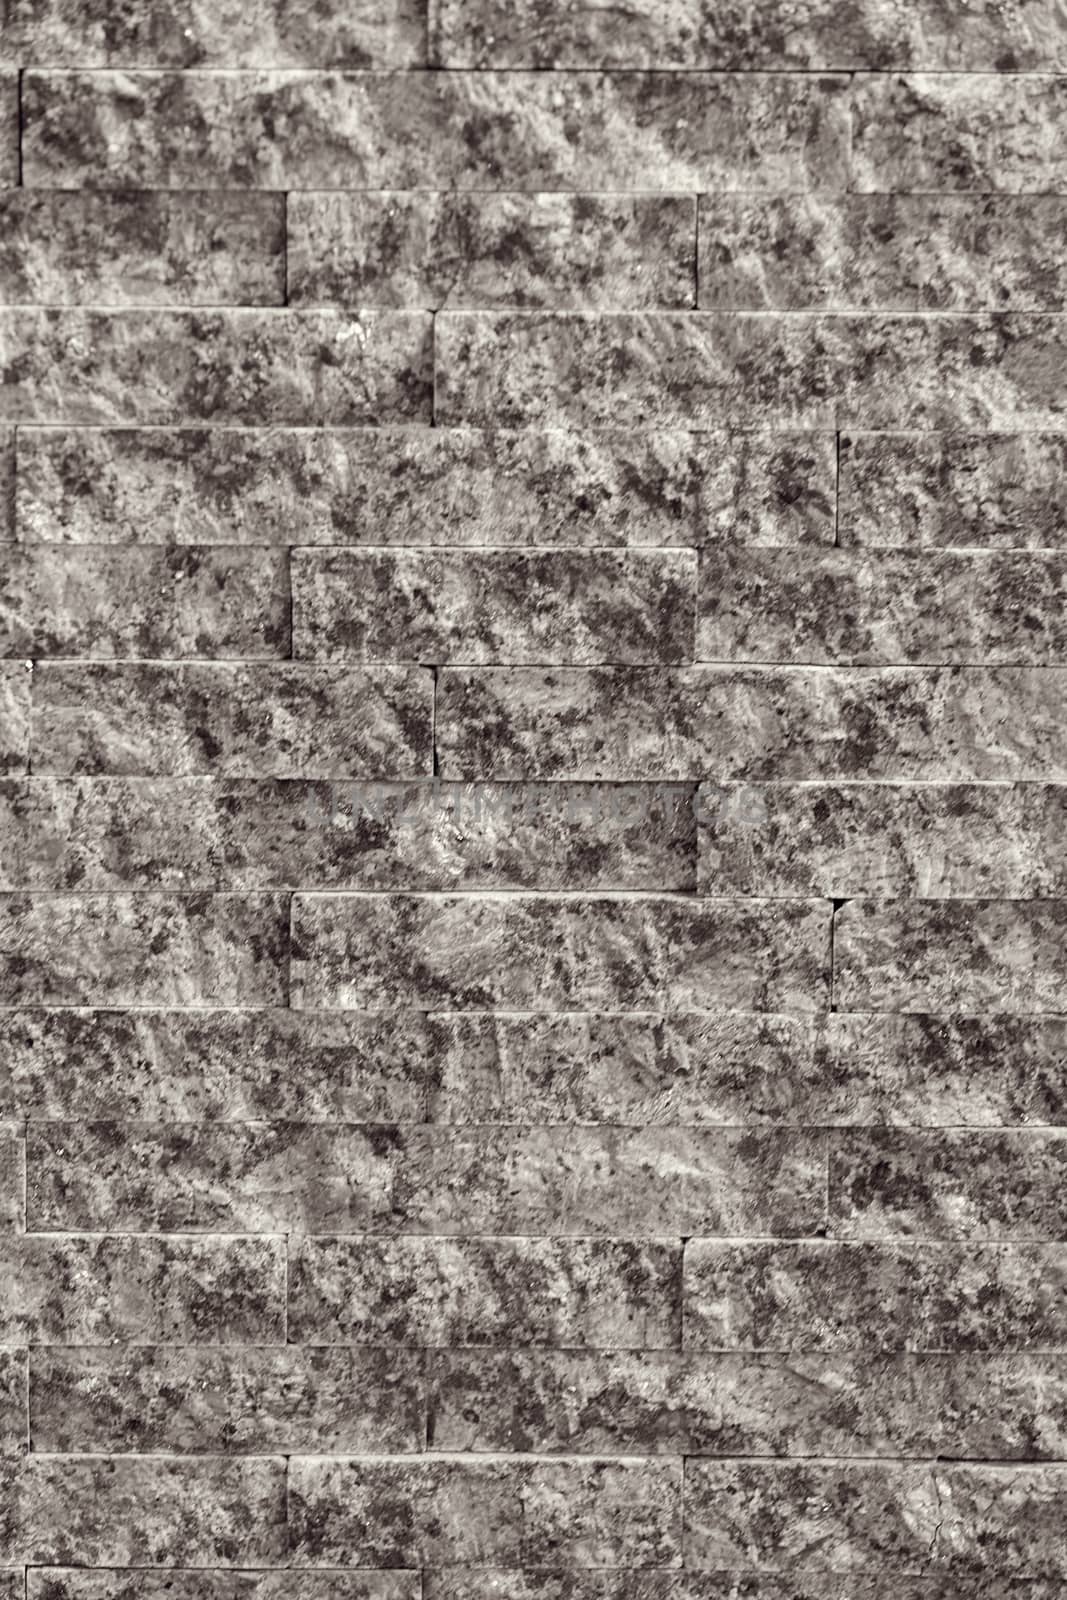 Wall made of concrete blocks by vladimirnenezic